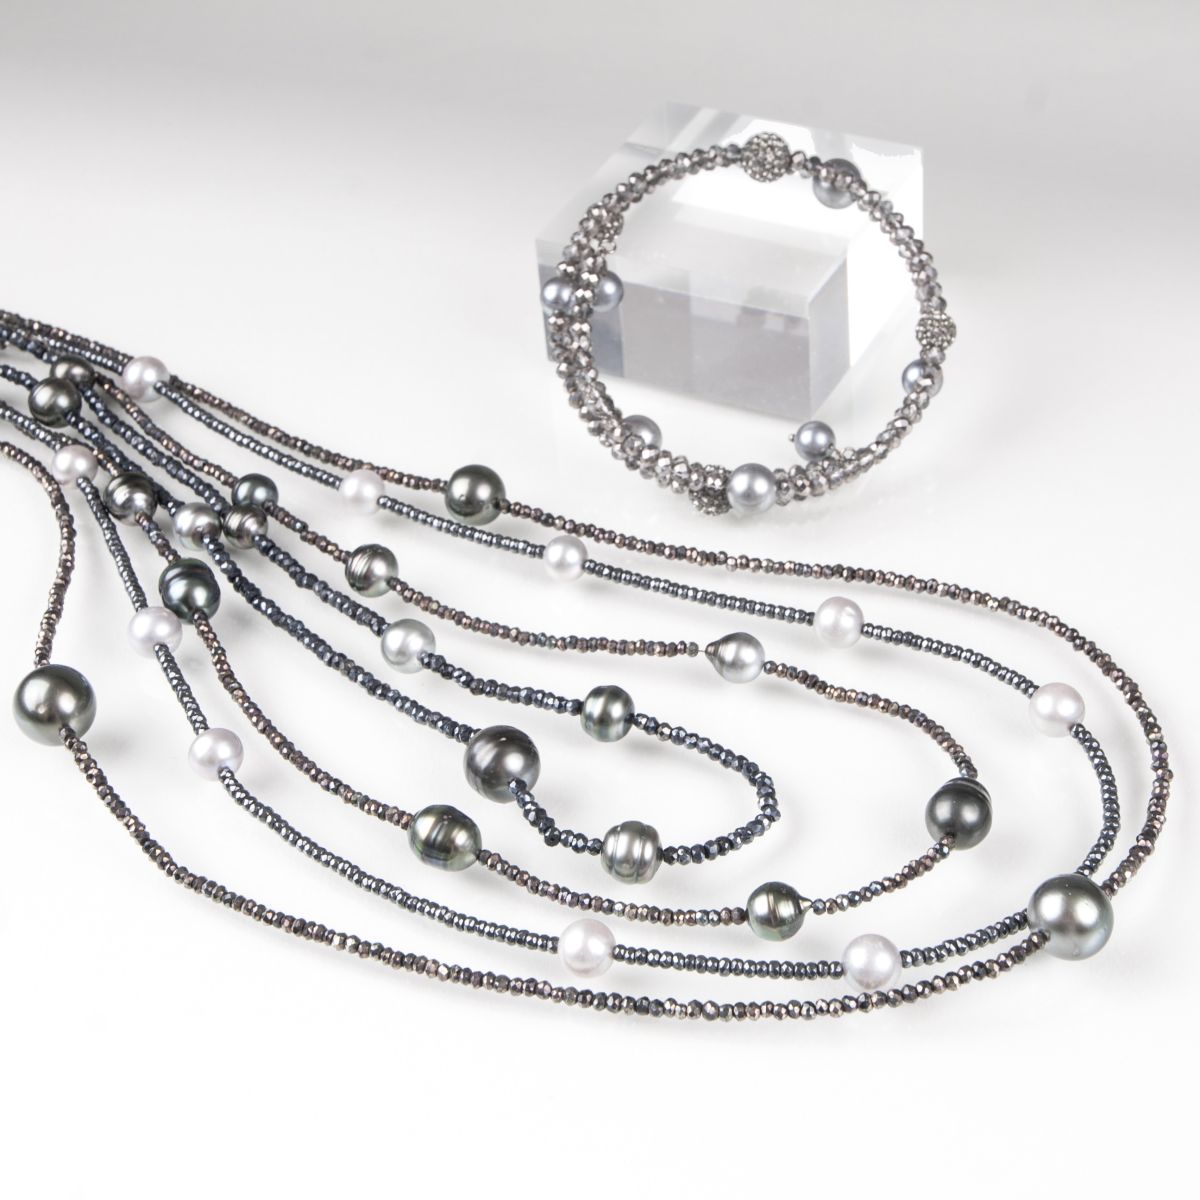 Four modern Tahiti pearl markasite necklaces